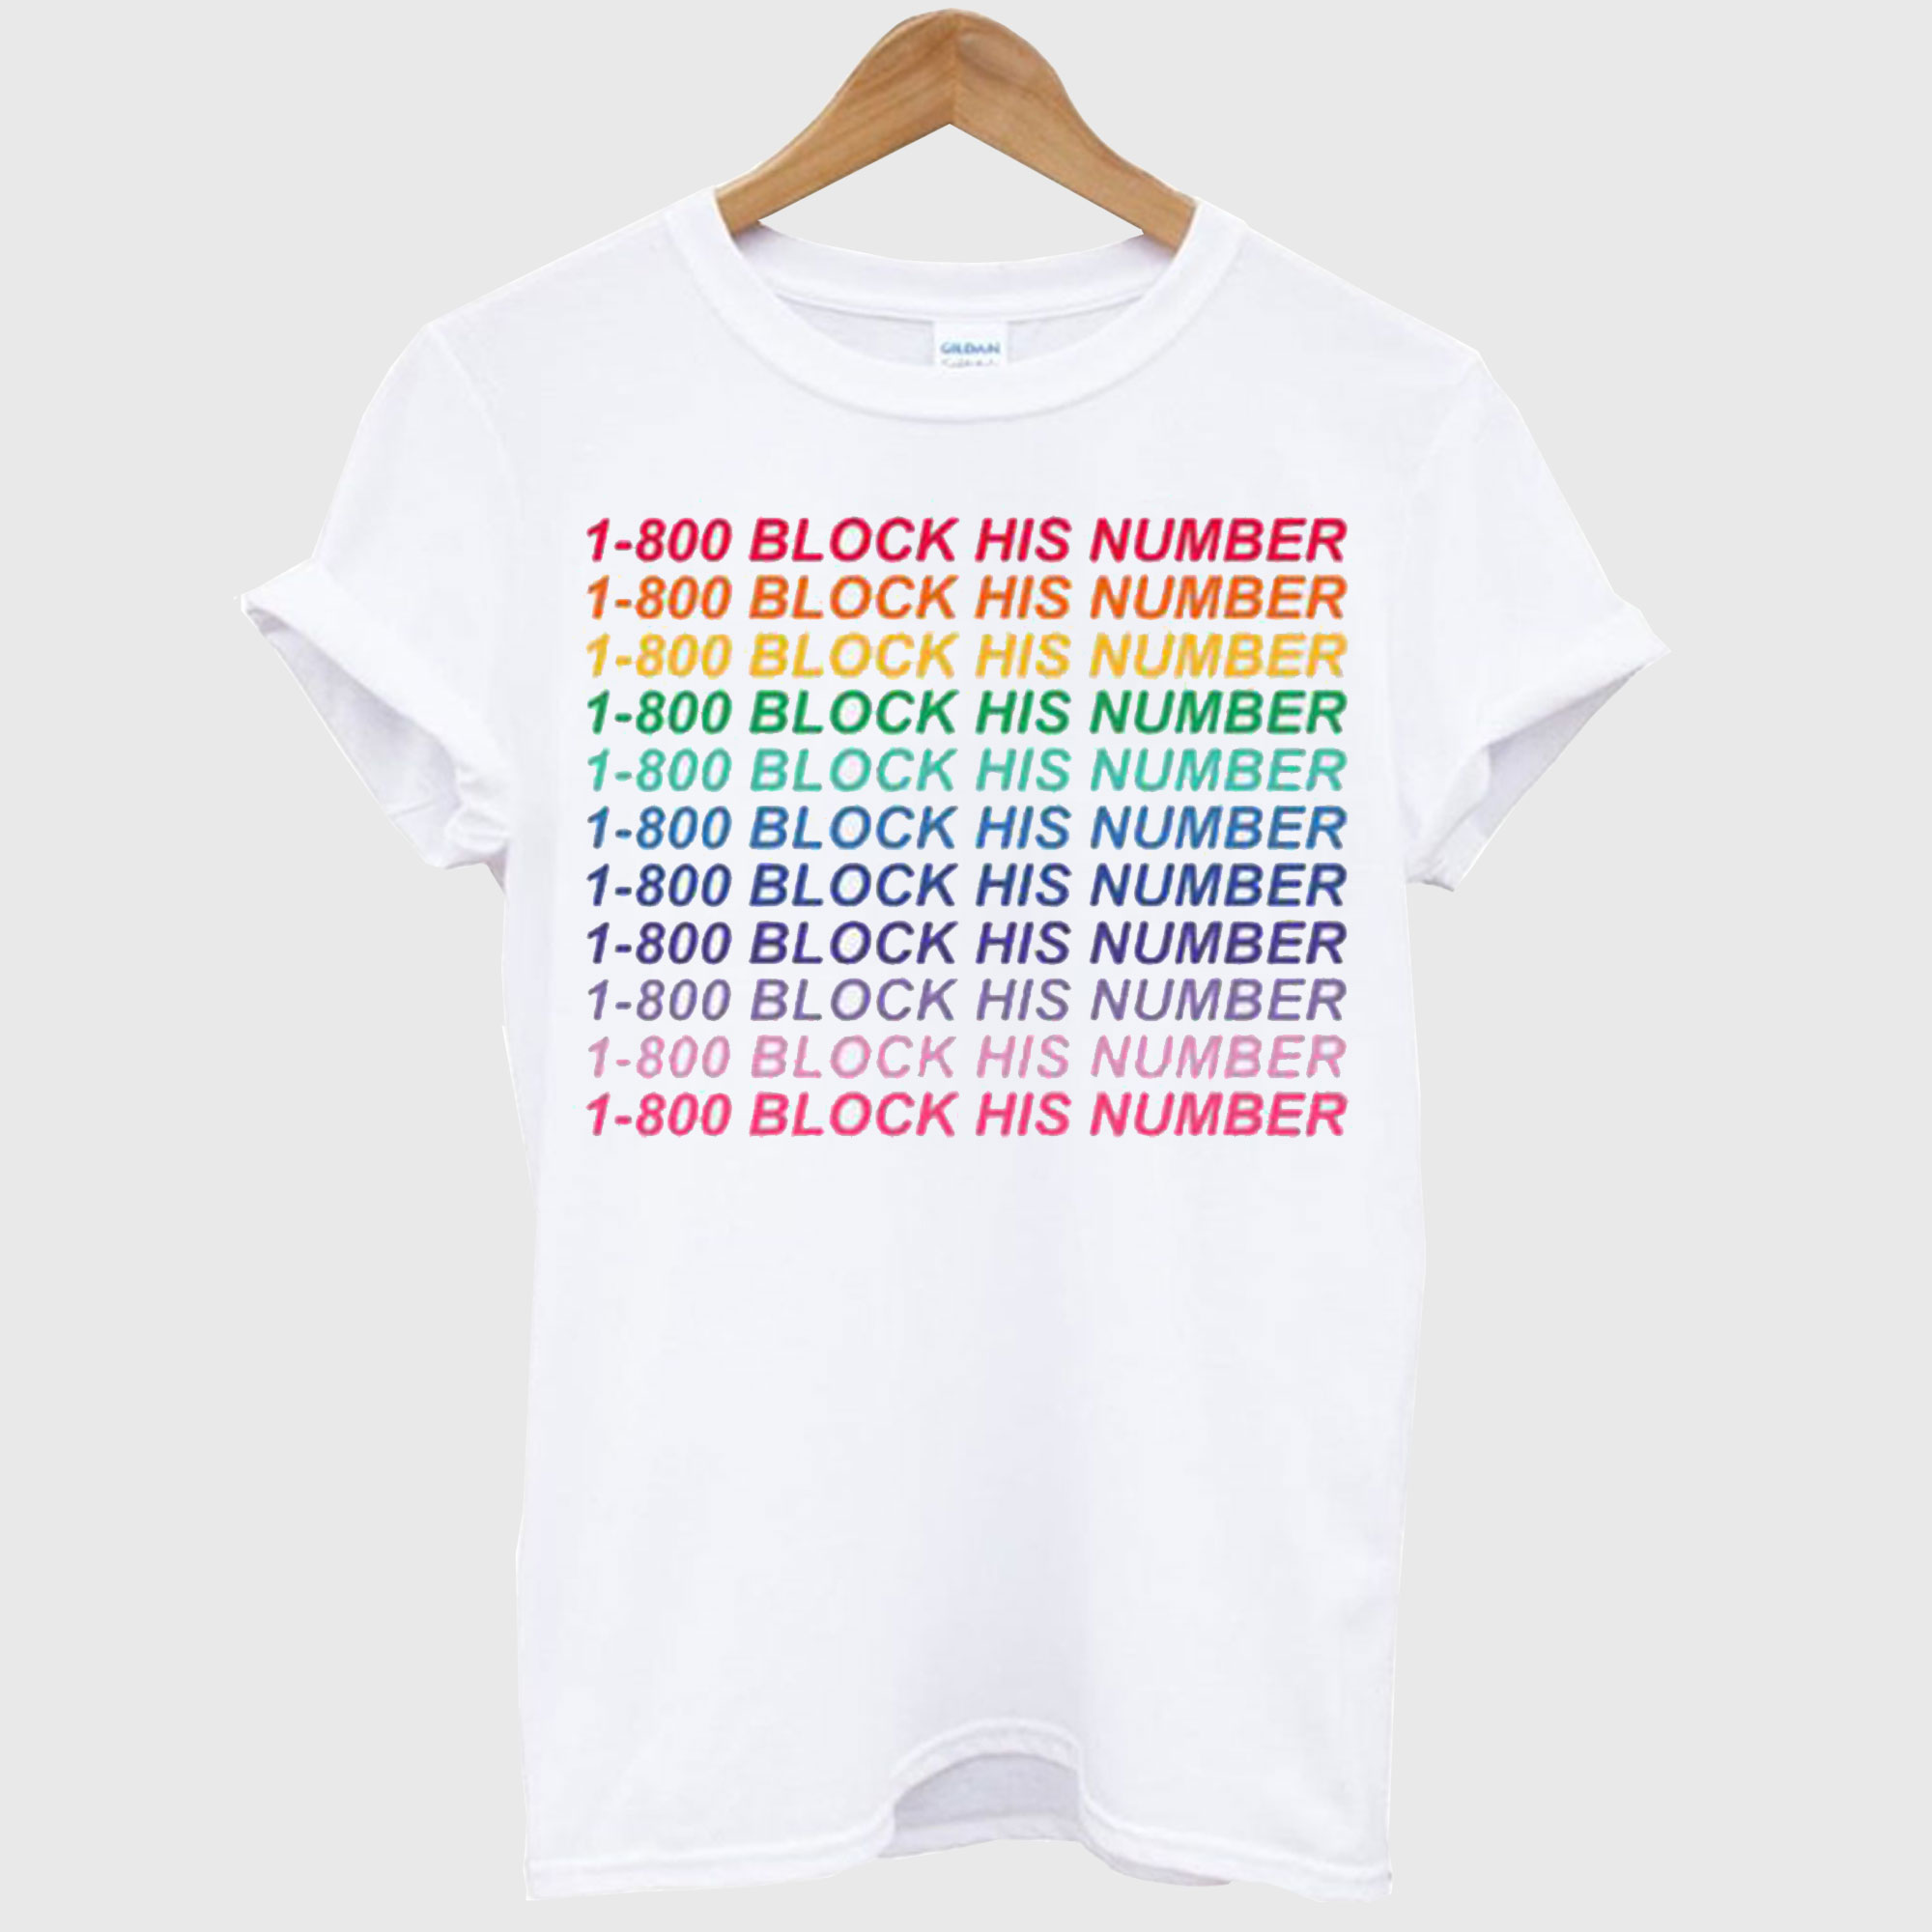 1-800 Block His Number T shirt